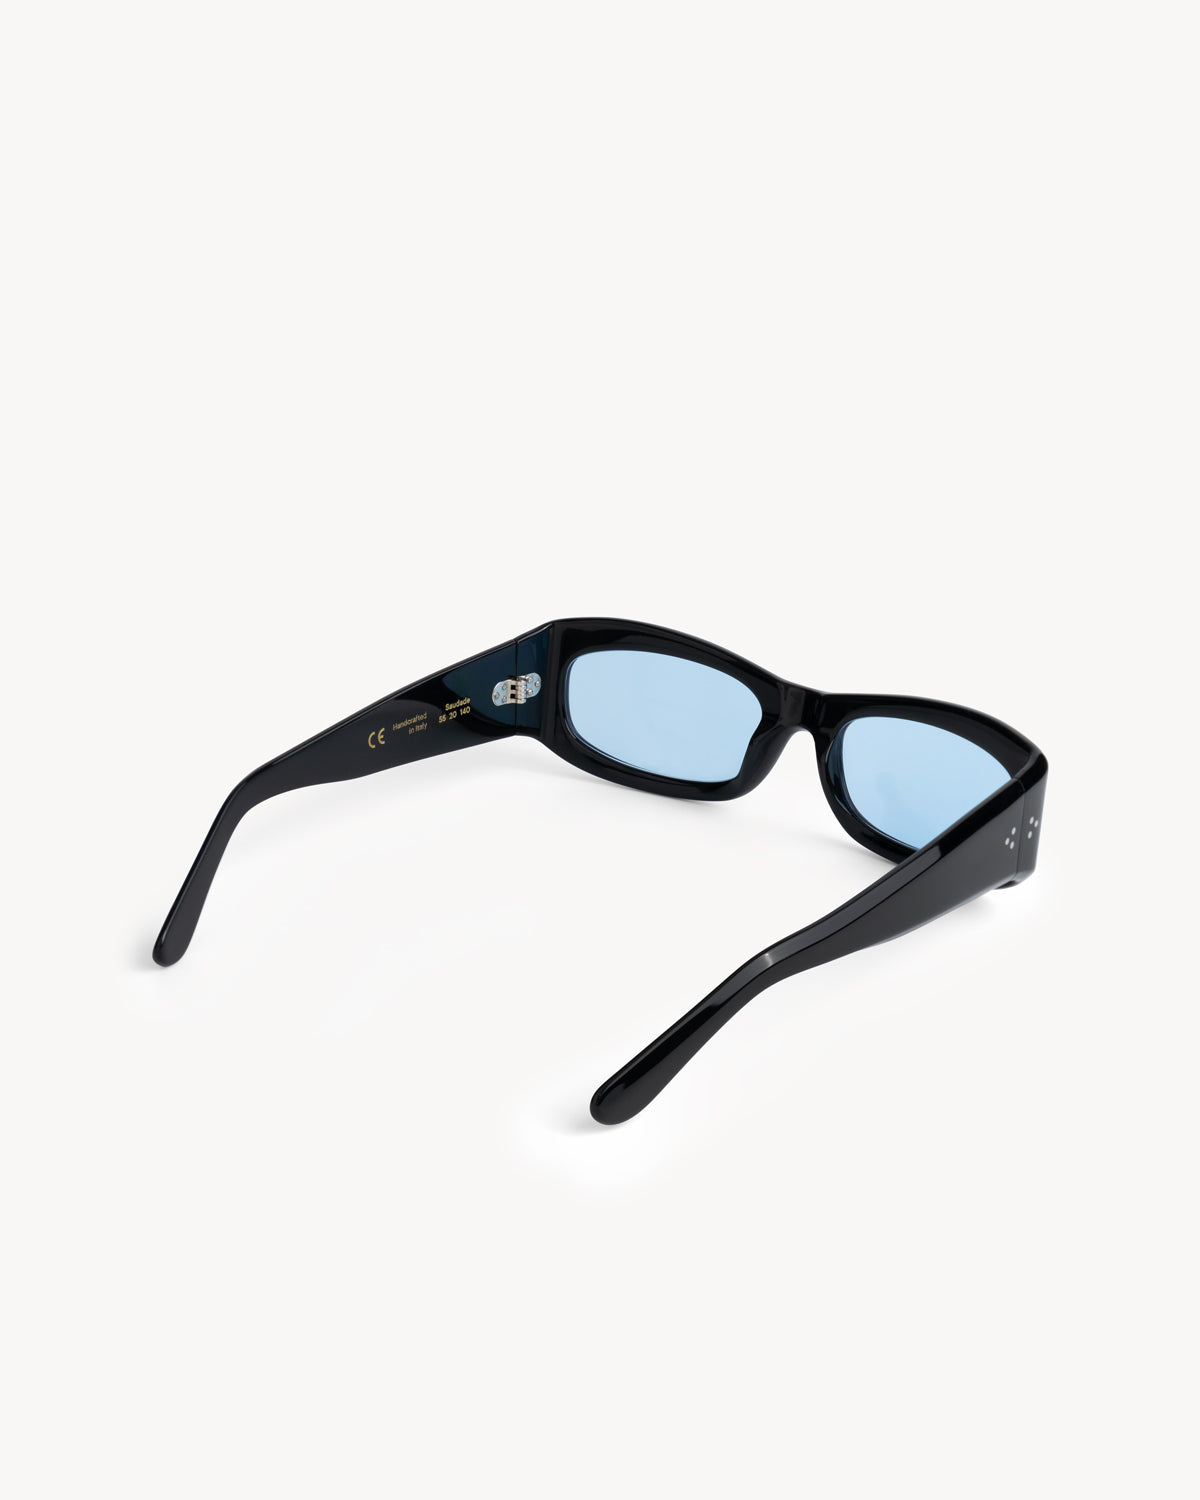 Port Tanger Saudade Sunglasses in Black Acetate and Rif Blue Lenses 3